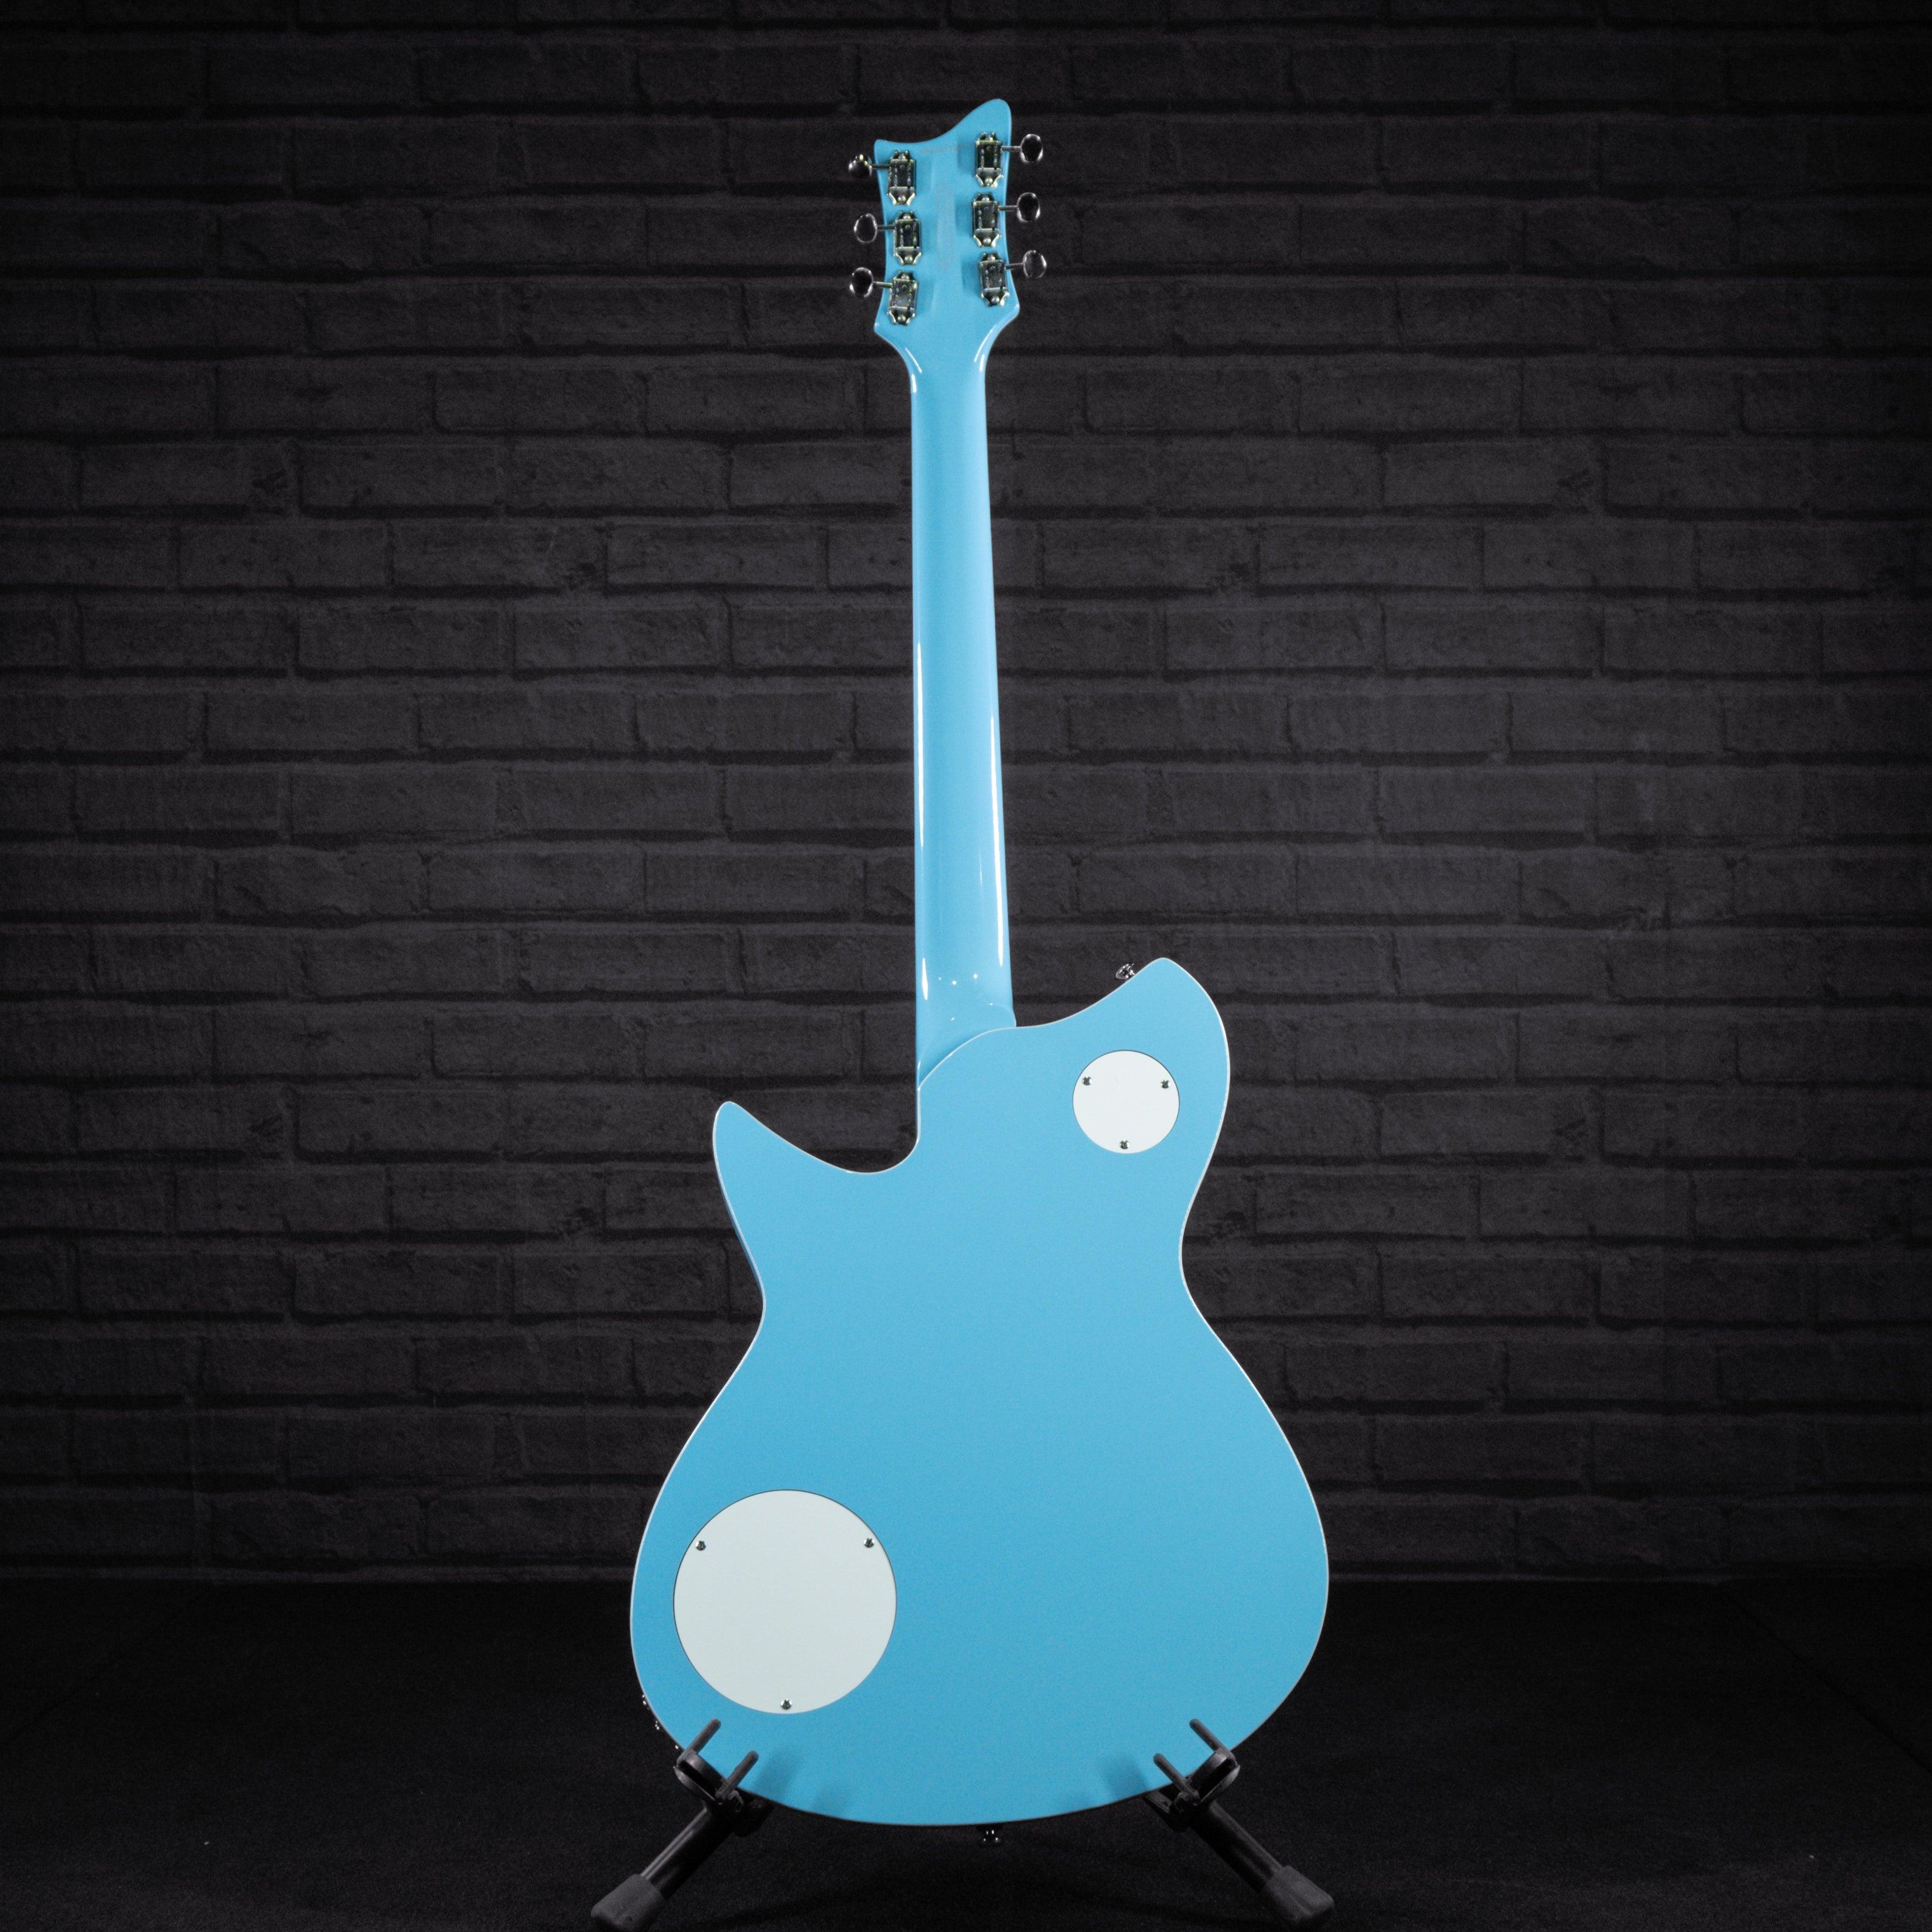 Rivolta Combinata XVII HSS "Califia Blue" (Impulse Music Co. Exclusive) Electric Guitar B-Stock - Impulse Music Co.